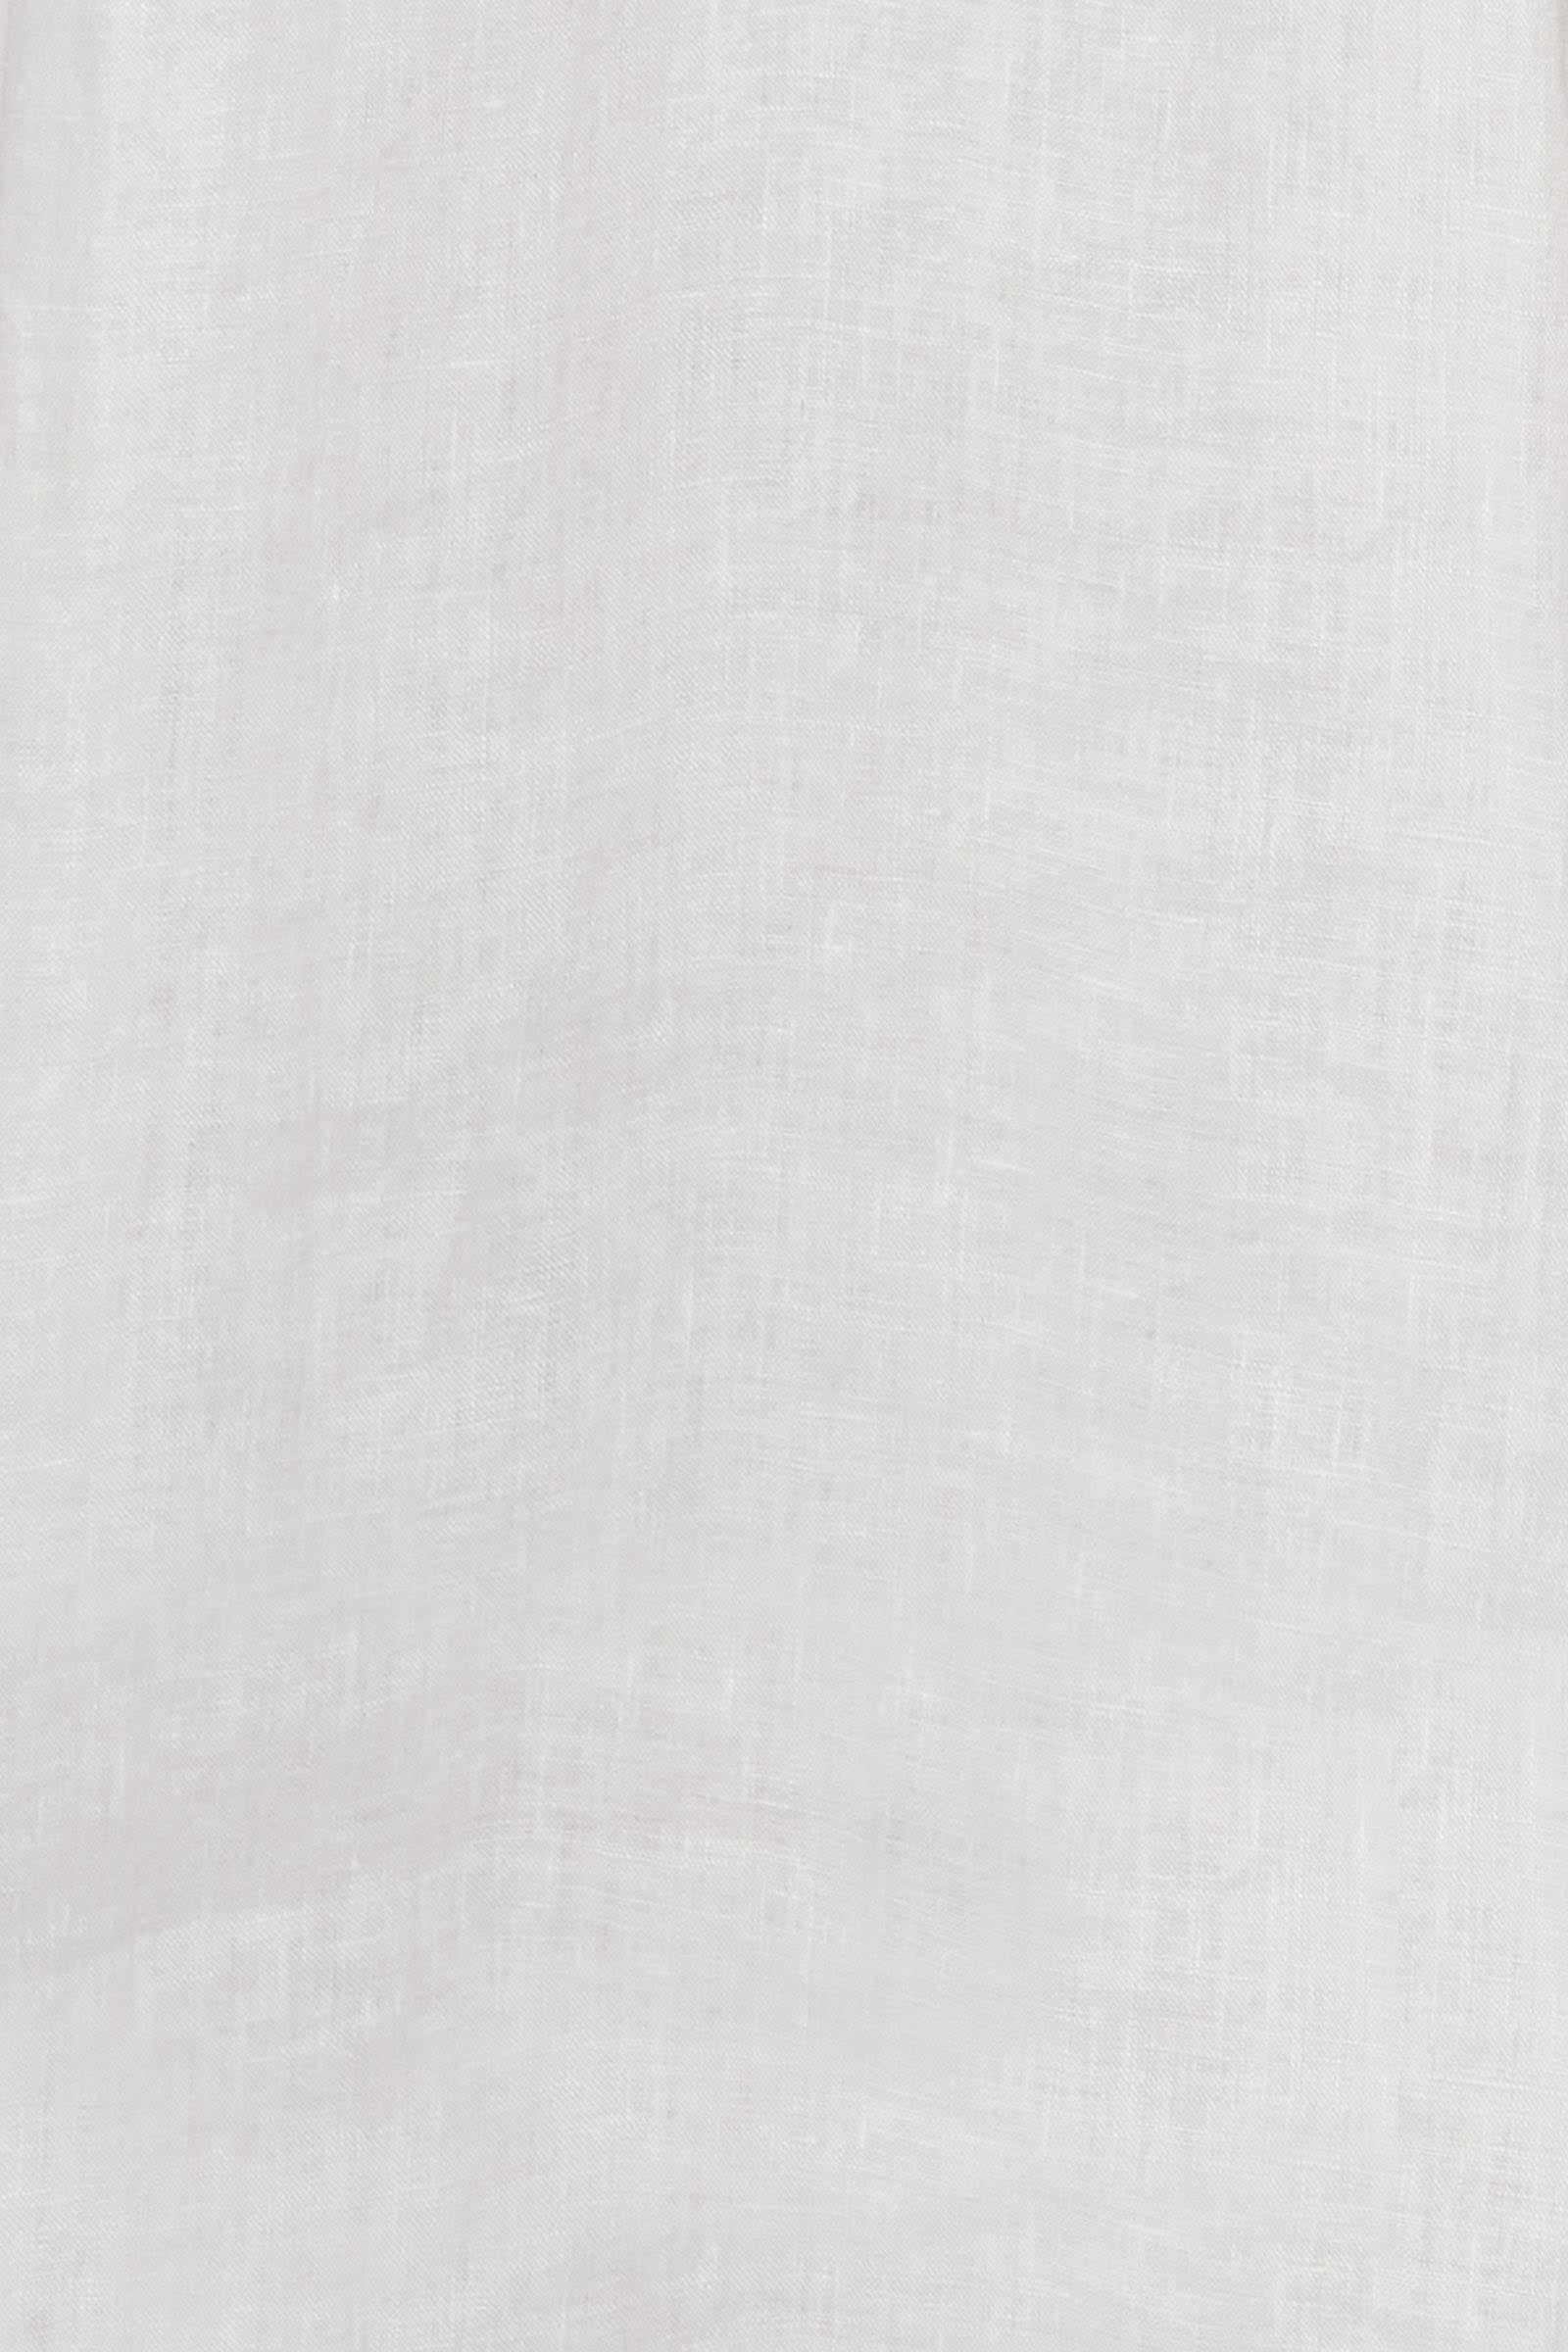 Studio Crop Pant - Salt - eb&ive Clothing - Pant Relaxed Crop Linen